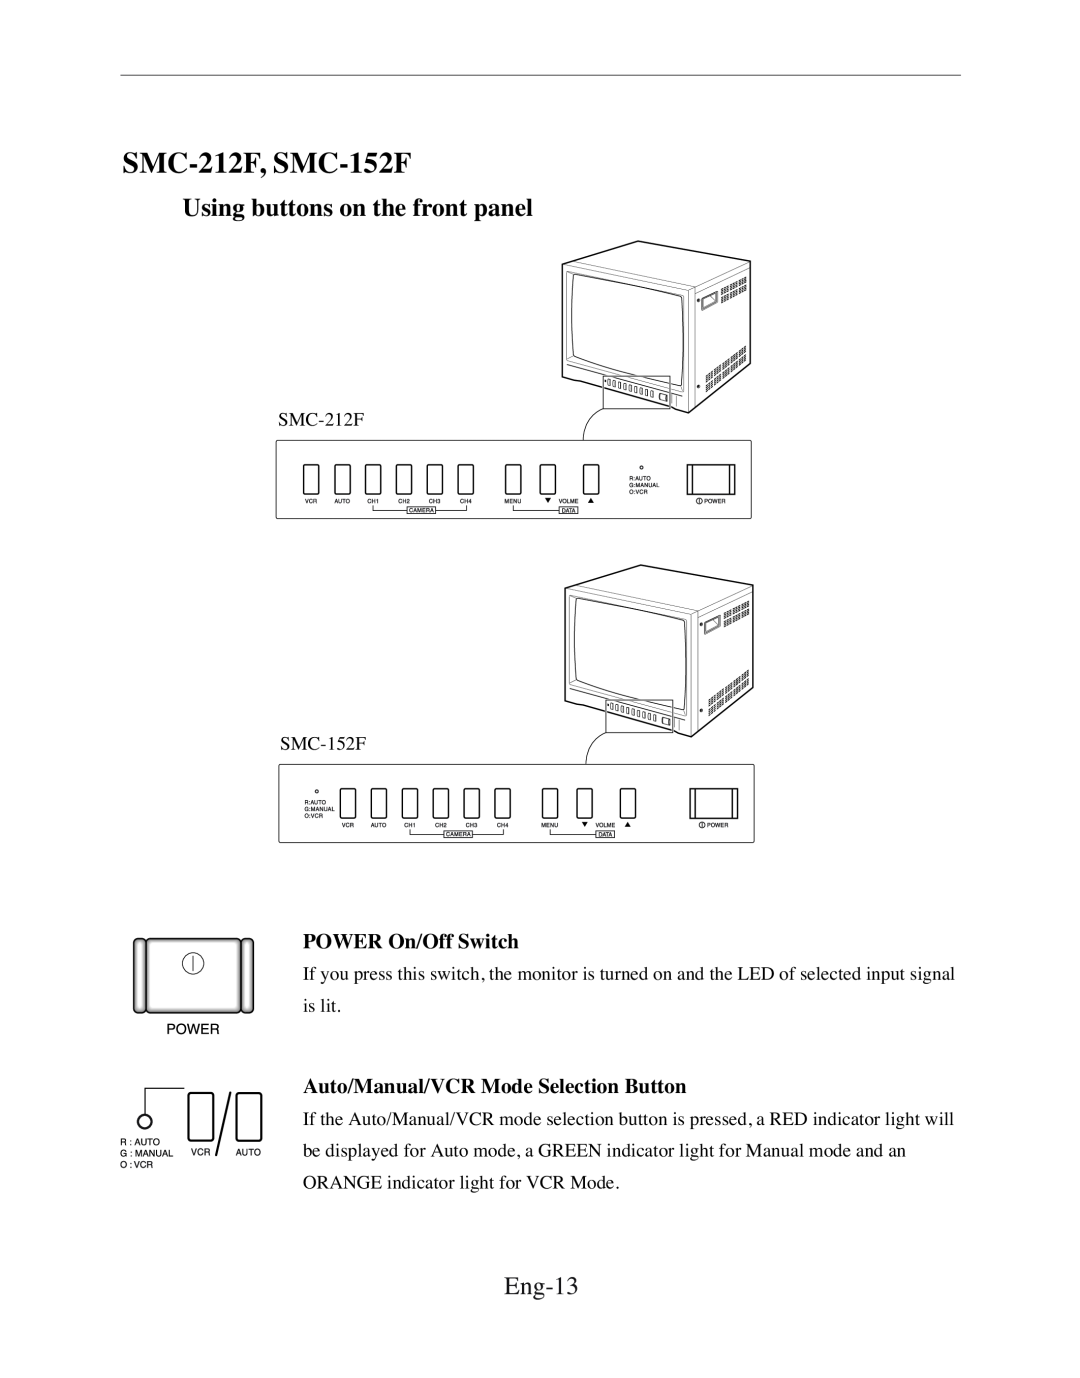 Samsung SMC-210FP, SMC-152FP manual SMC-212F, SMC-152F, Eng-13, POWER On/Off Switch, Auto/Manual/VCR Mode Selection Button 